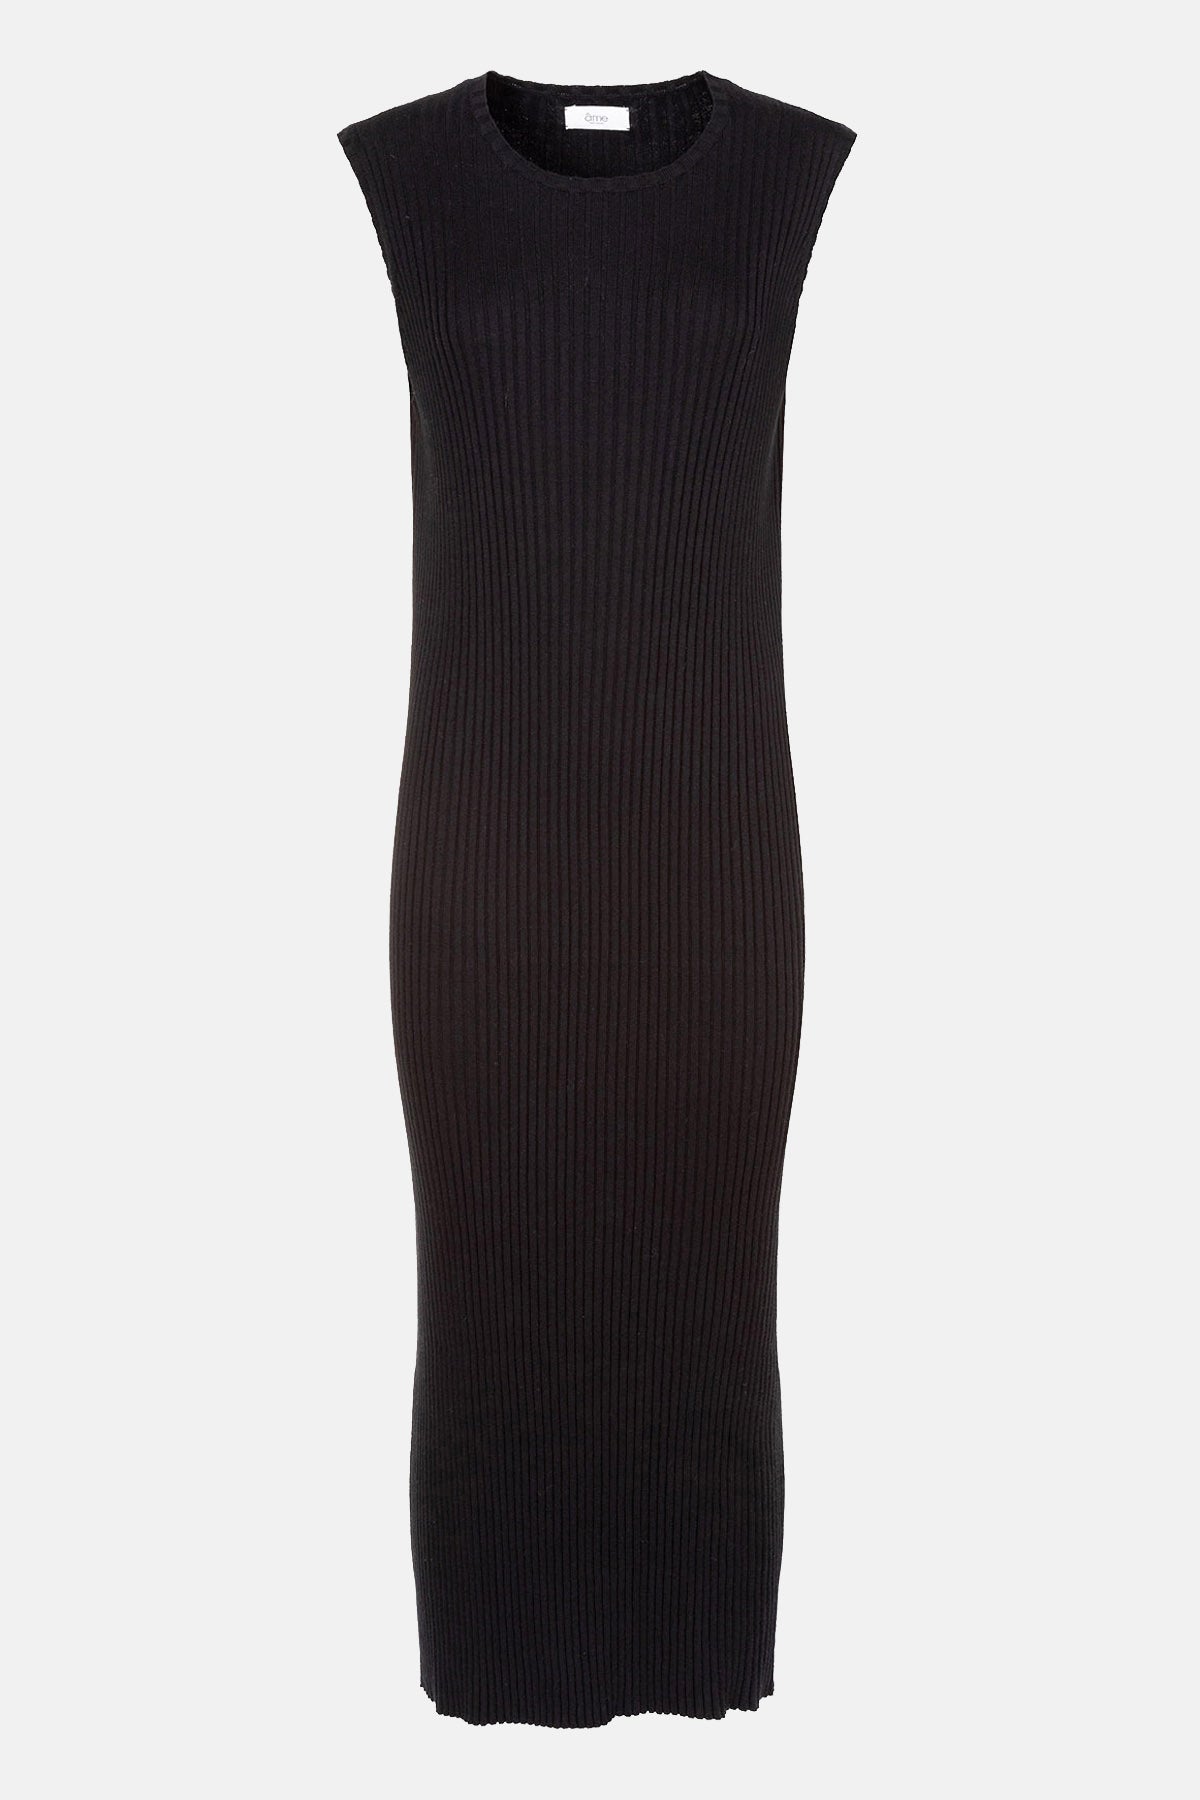 Justine Cotton Cashmere Rib Dress | Black